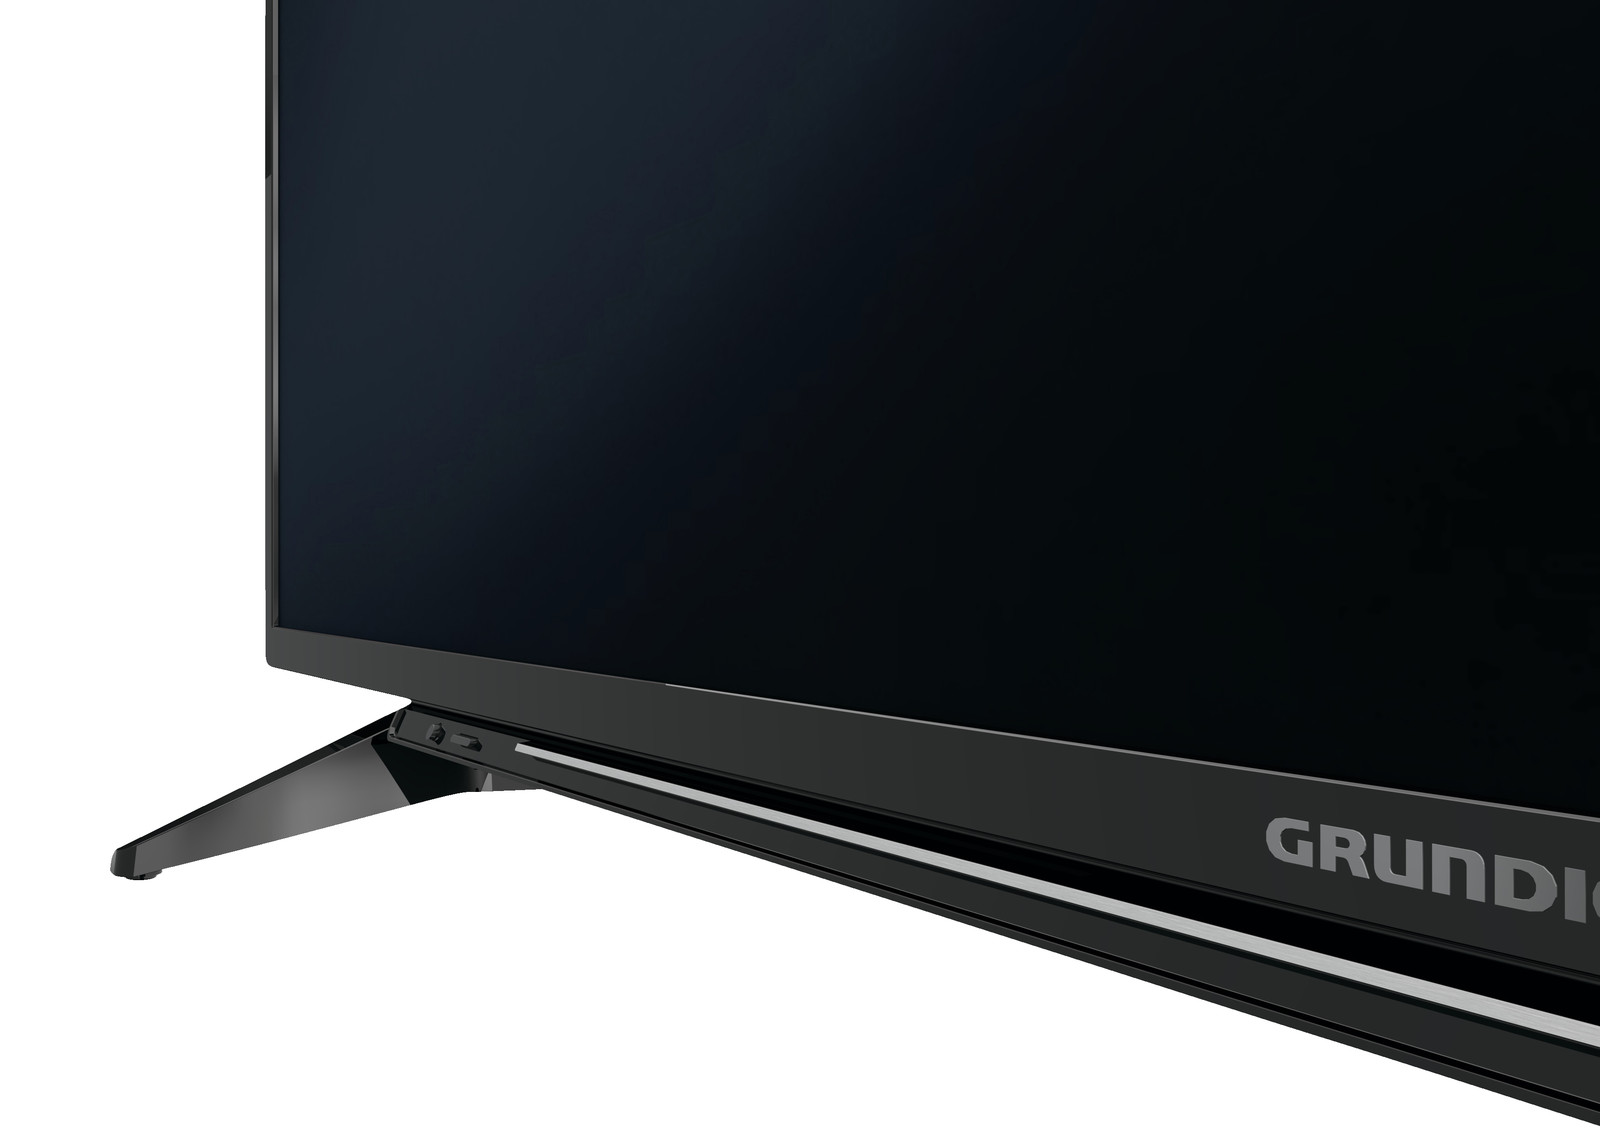 Телевизор grundig 40. Телевизор Grundig 32gfb6820 32" (2018). Телевизор Grundig 43. Телевизор Грюндик 65. Grundig 40.